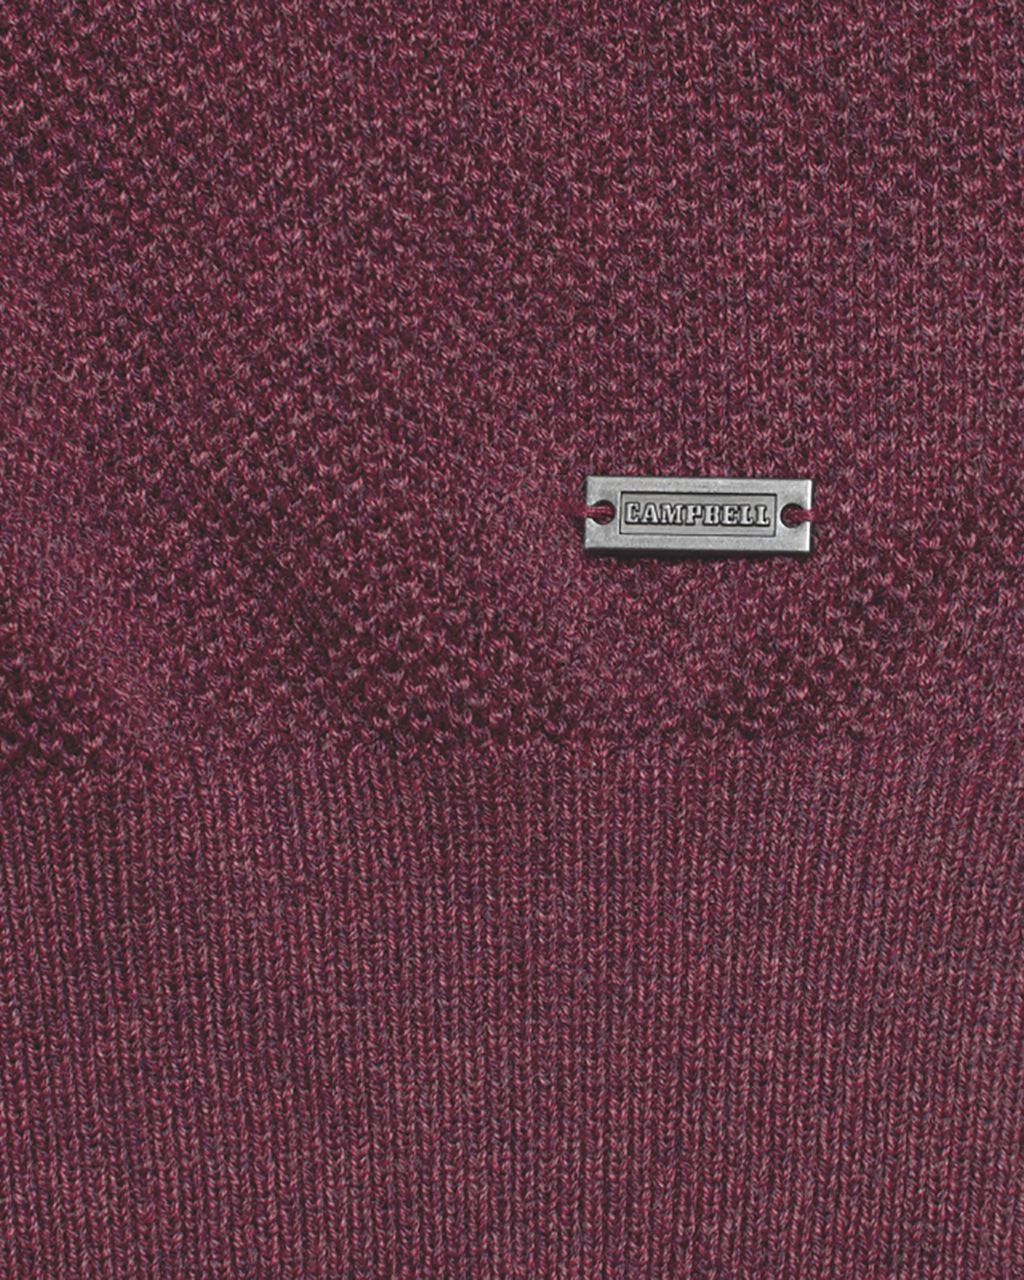 Campbell Classic Gresham Trui ronde hals  Donker roze uni 073165-003-L